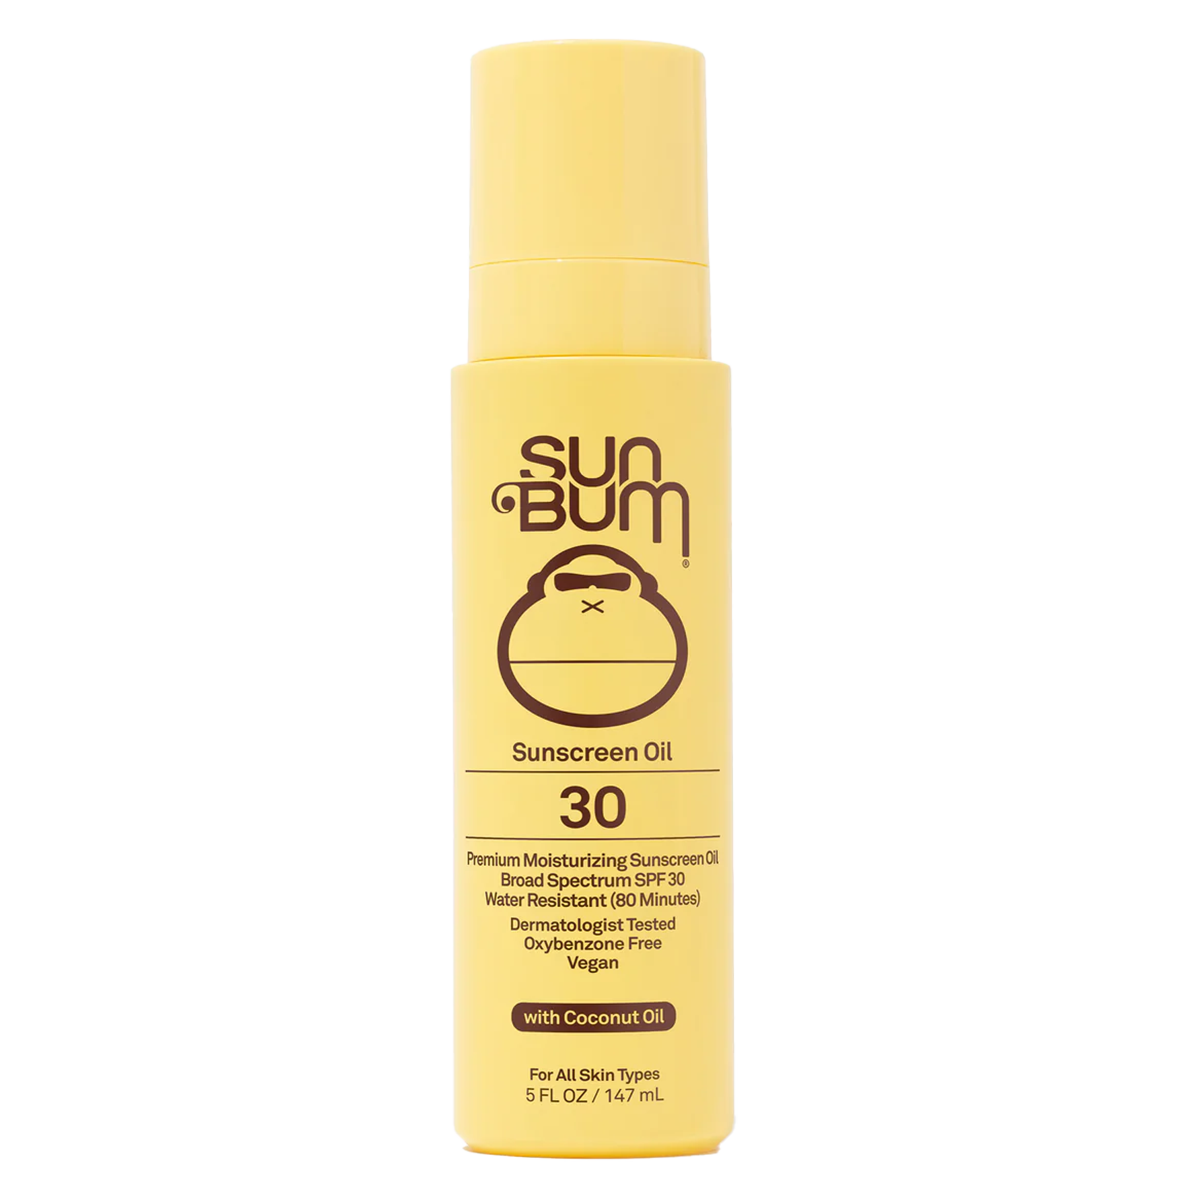 Sunscreen Oil SPF 30 alternate view